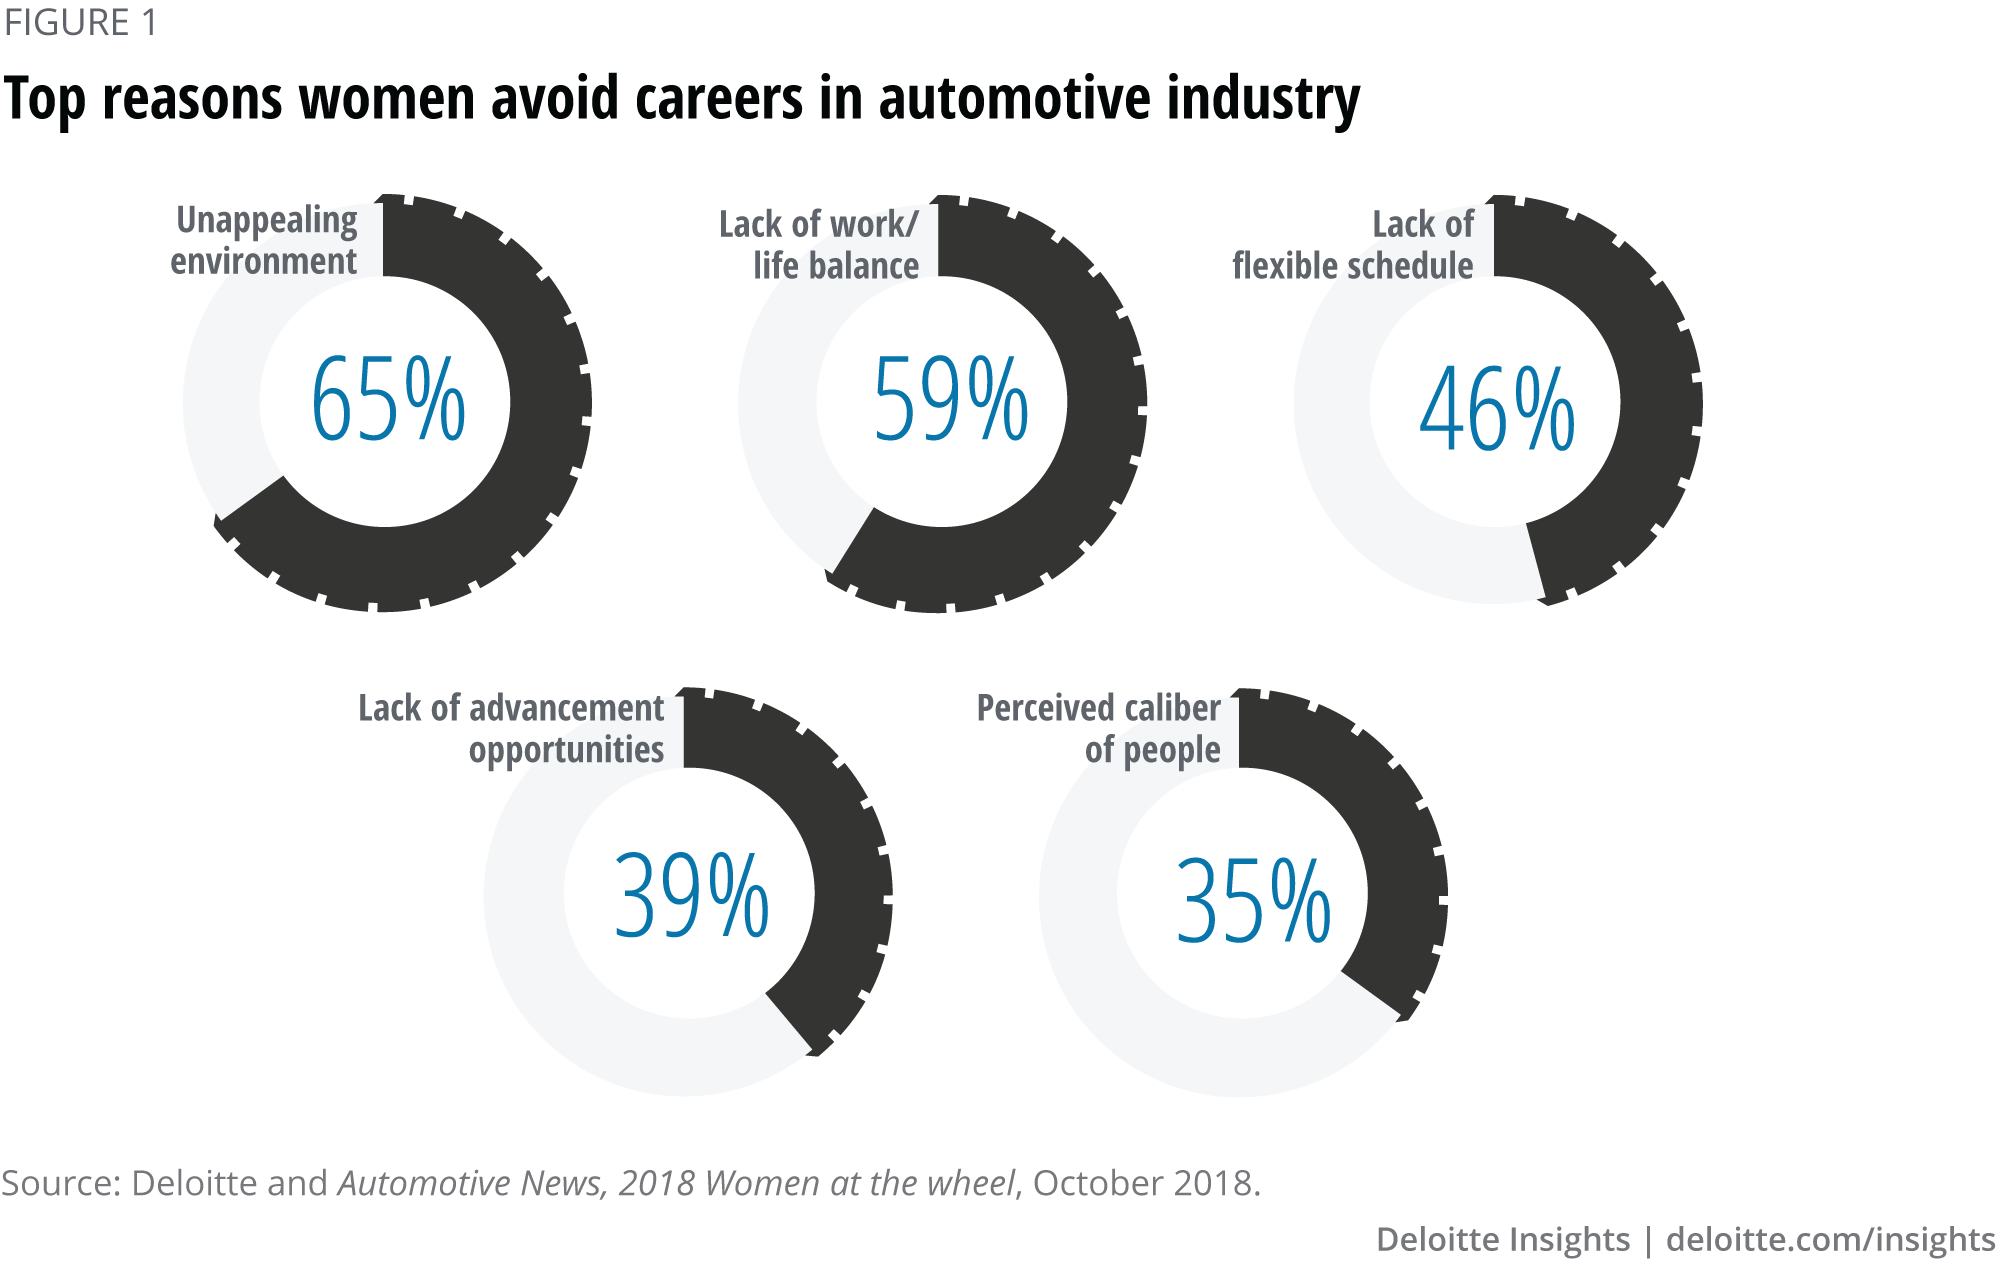 Top reasons women avoid careers in automotive industry